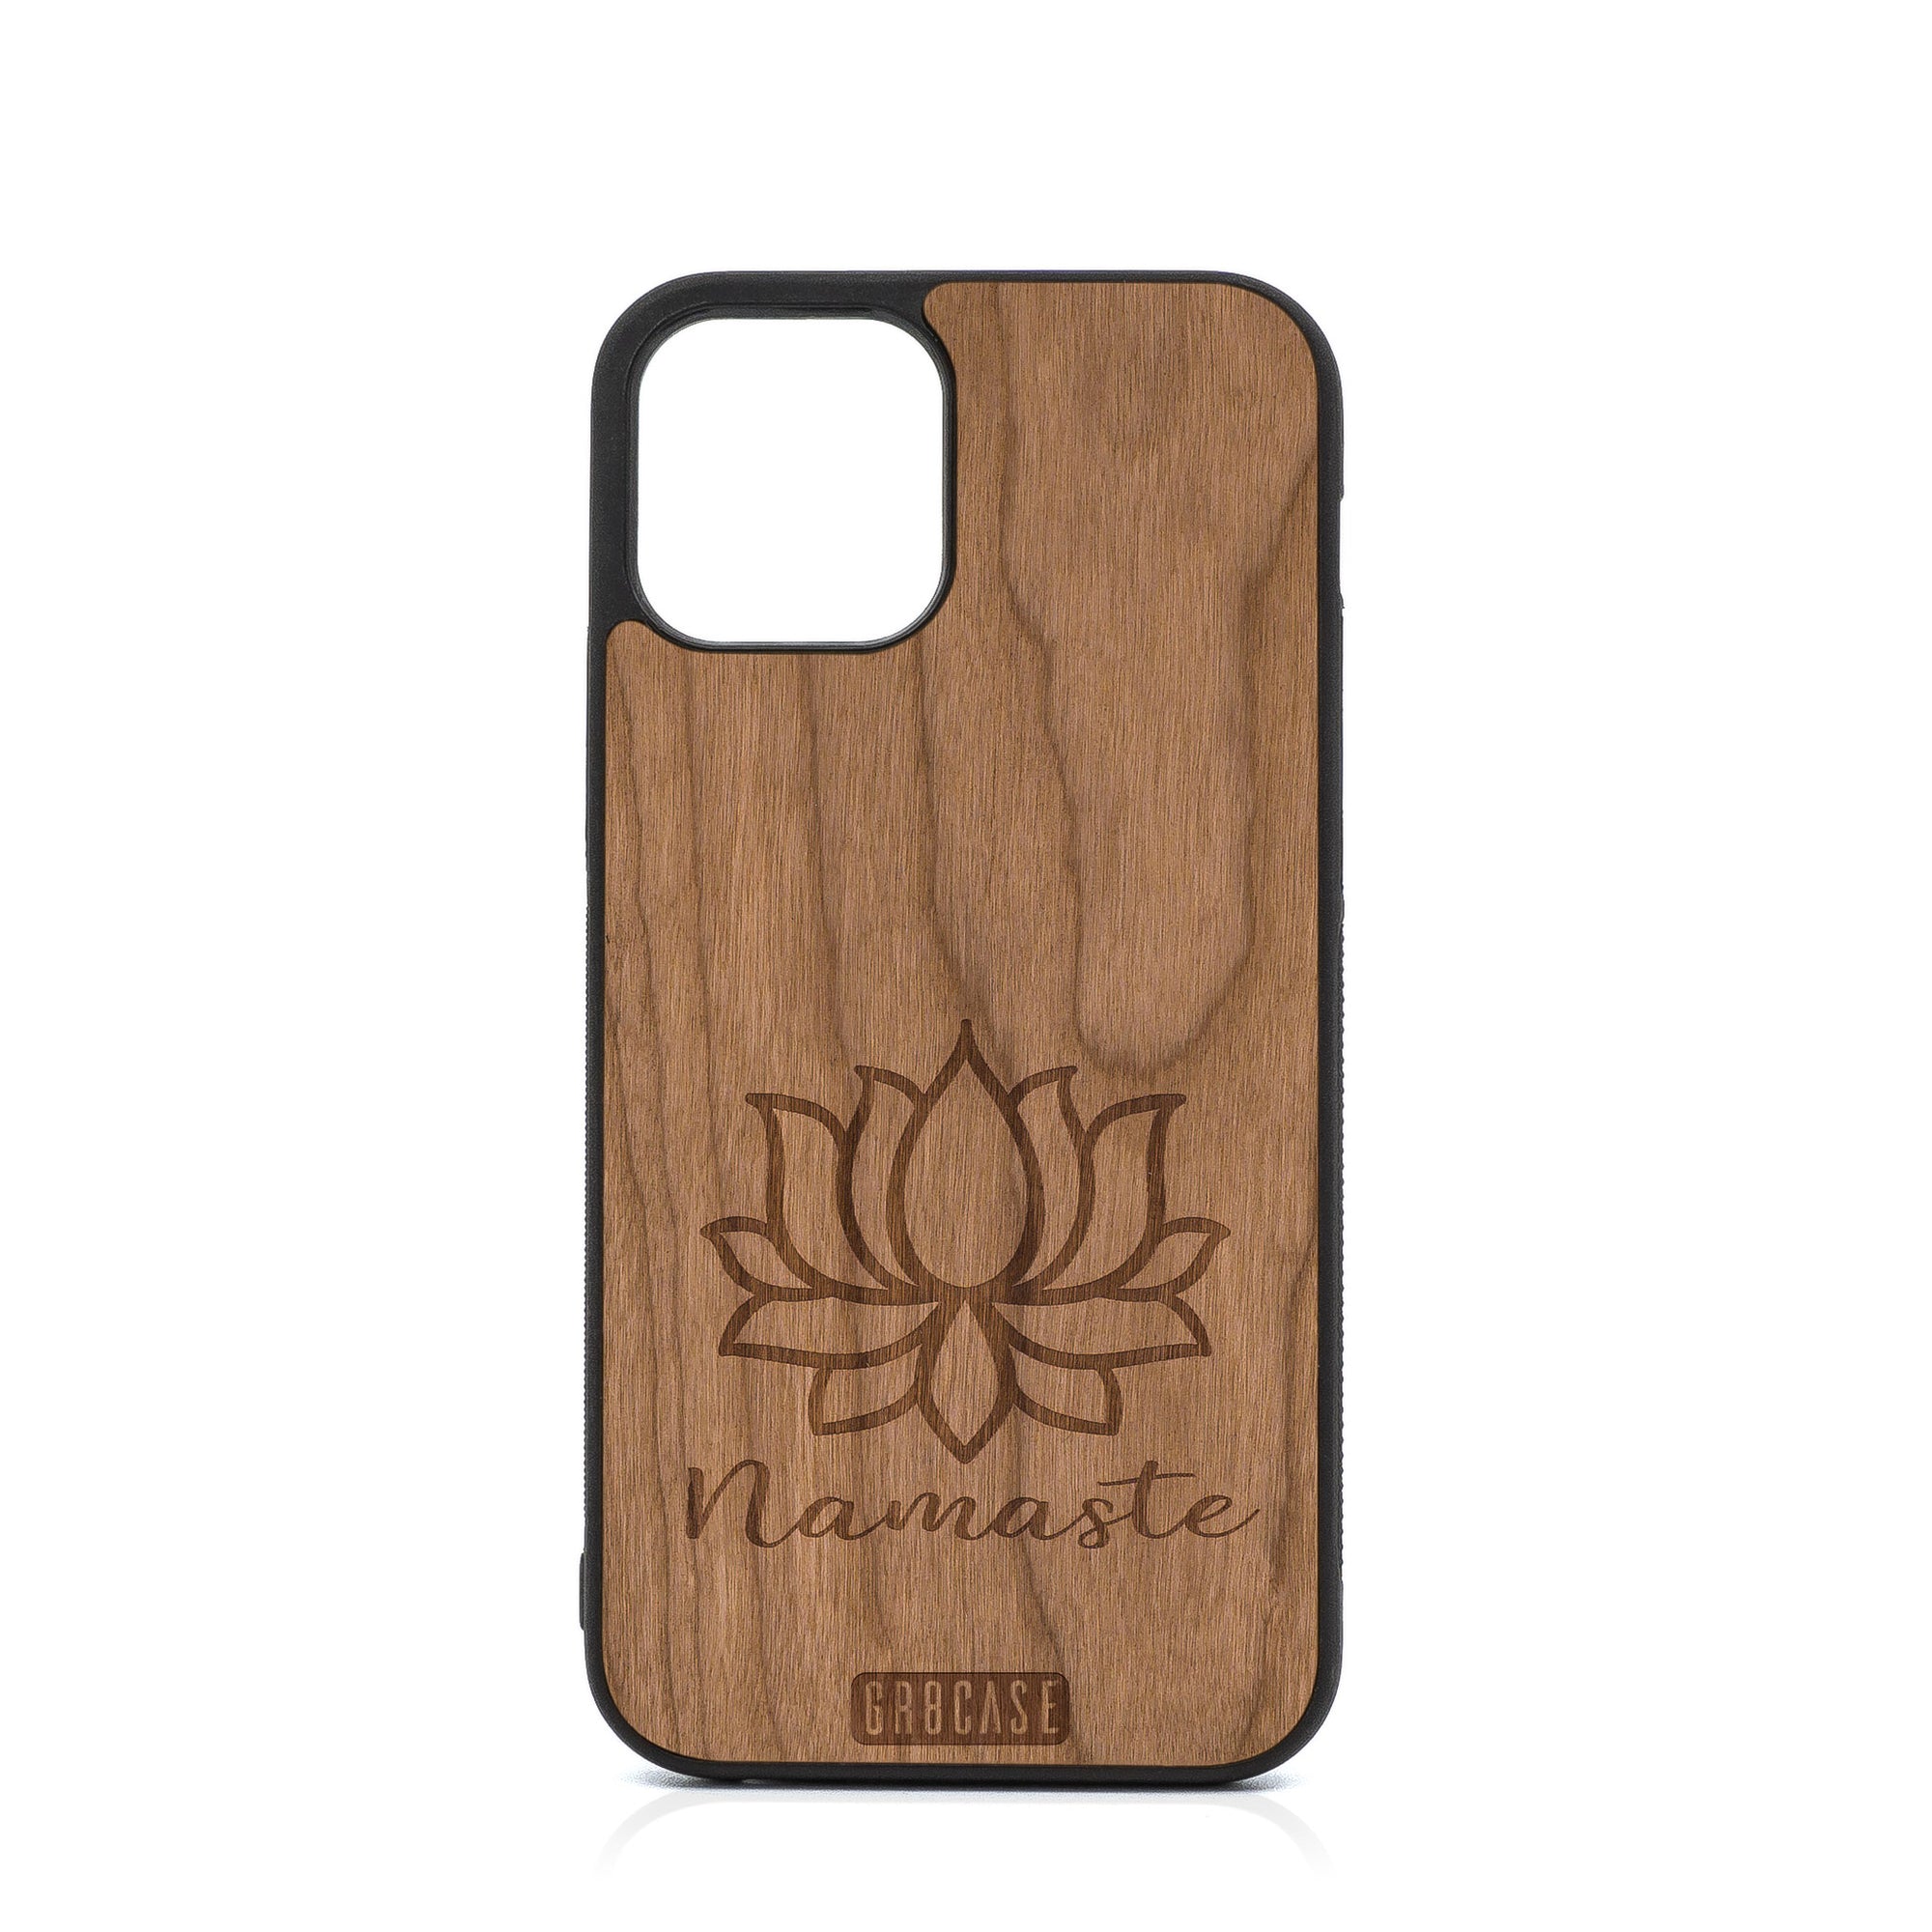 Namaste (Lotus Flower) Design Wood Case For iPhone 12 Pro